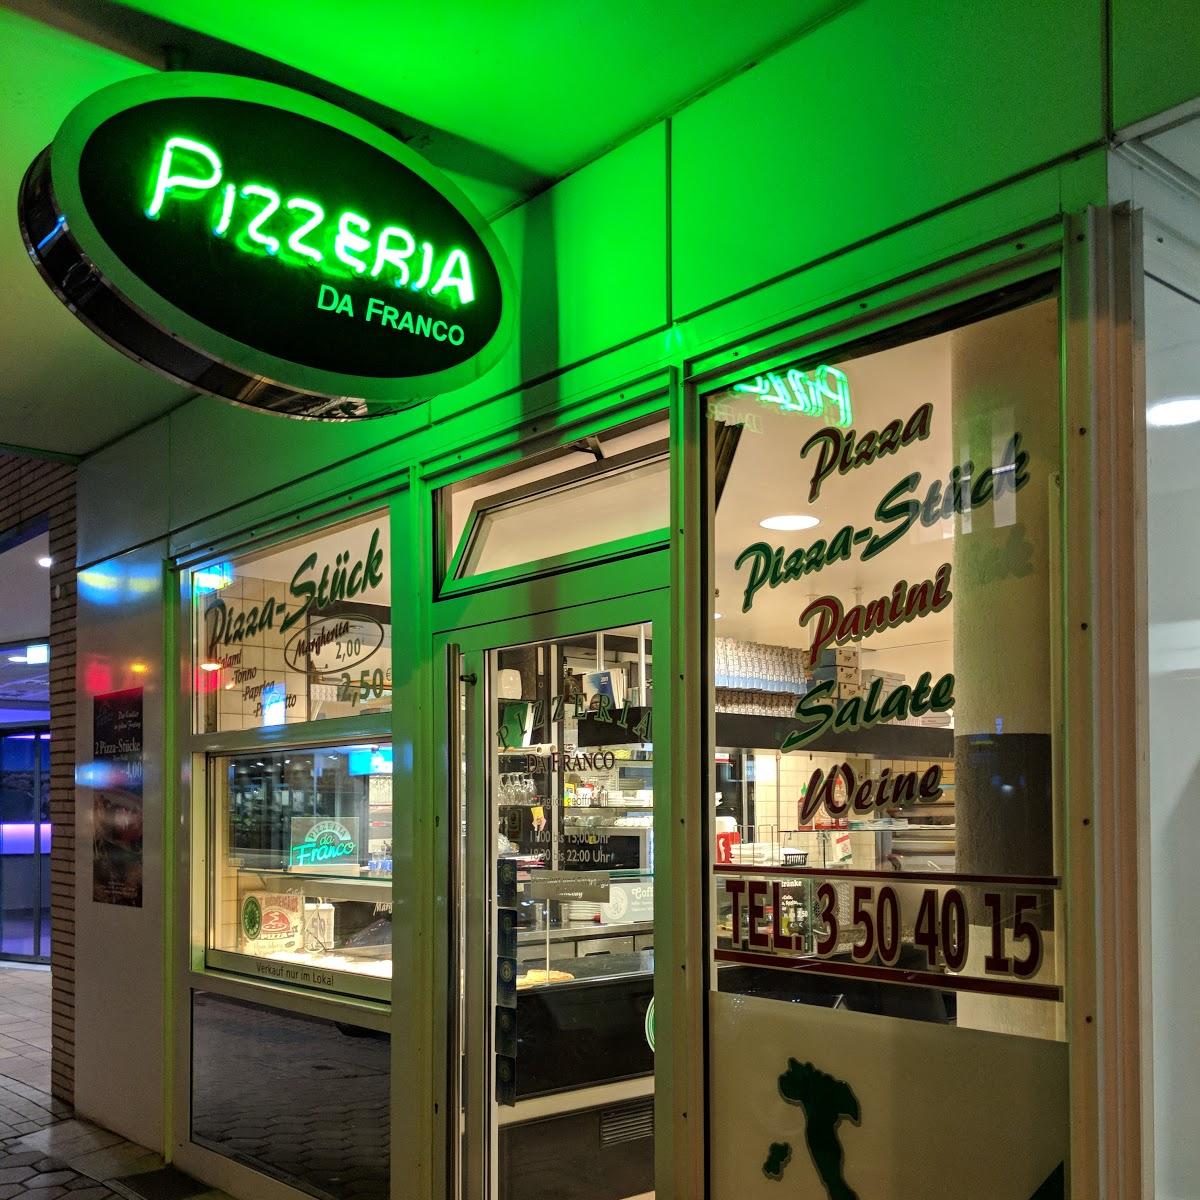 Restaurant "Pizzeria Da Franco" in Osnabrück